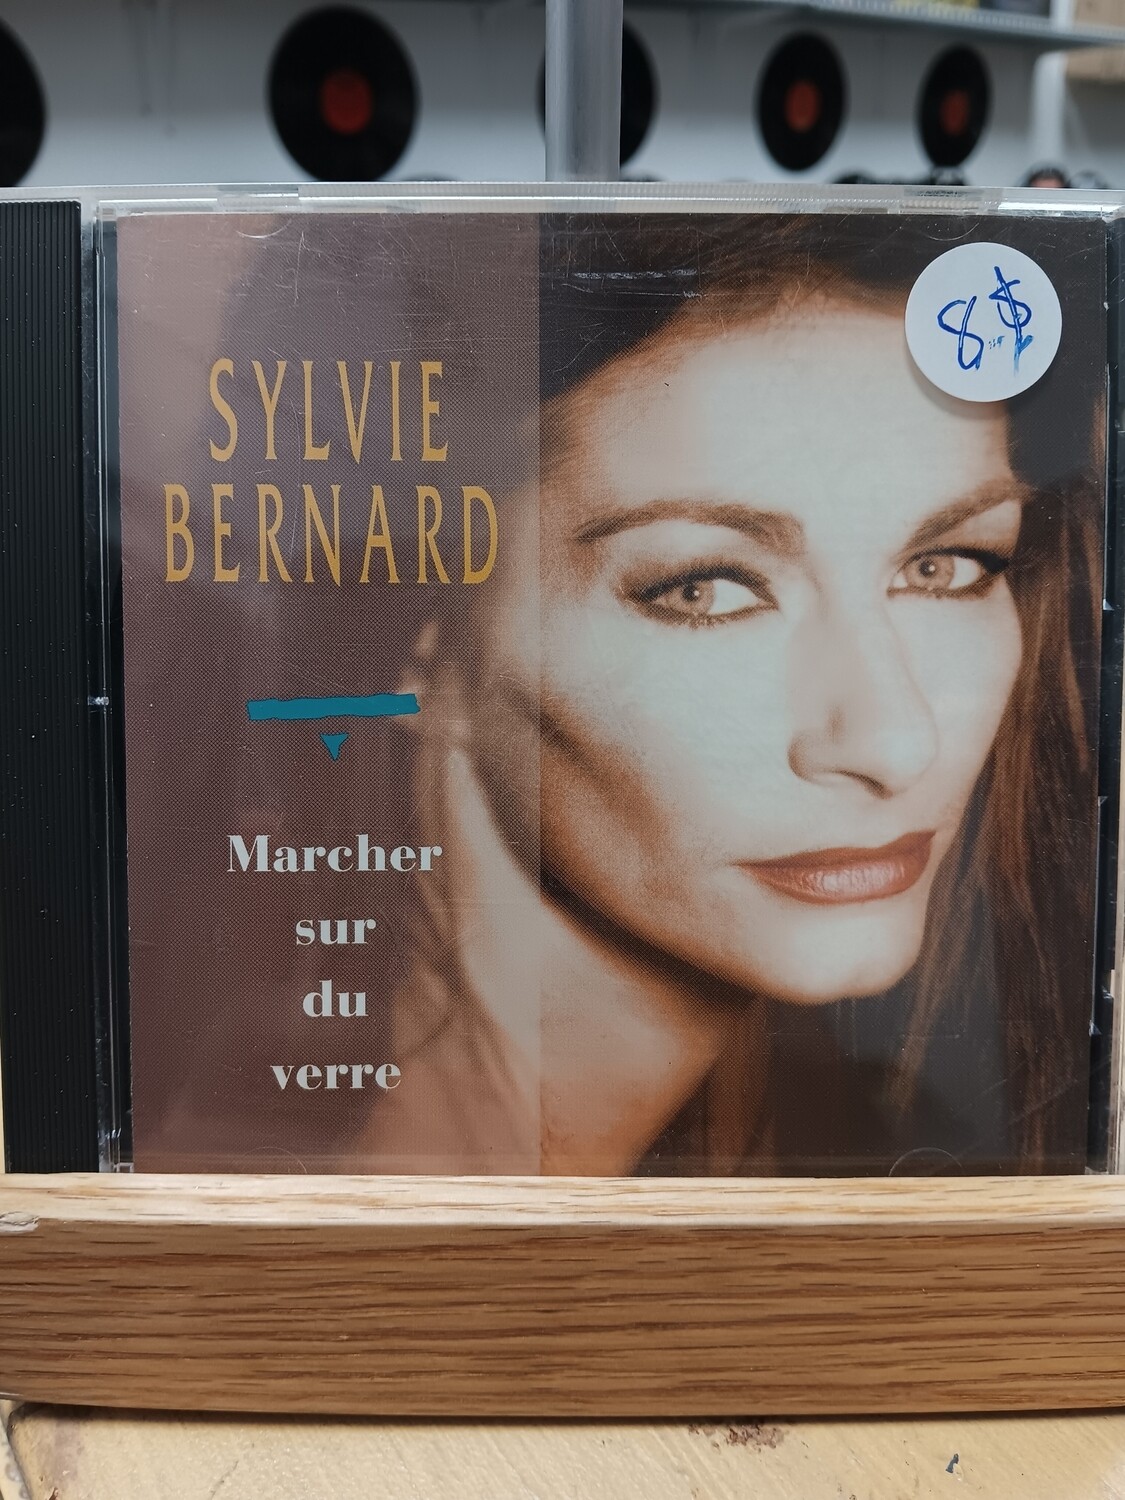 Sylvie Bernard - Marcher sur du verre (CD)